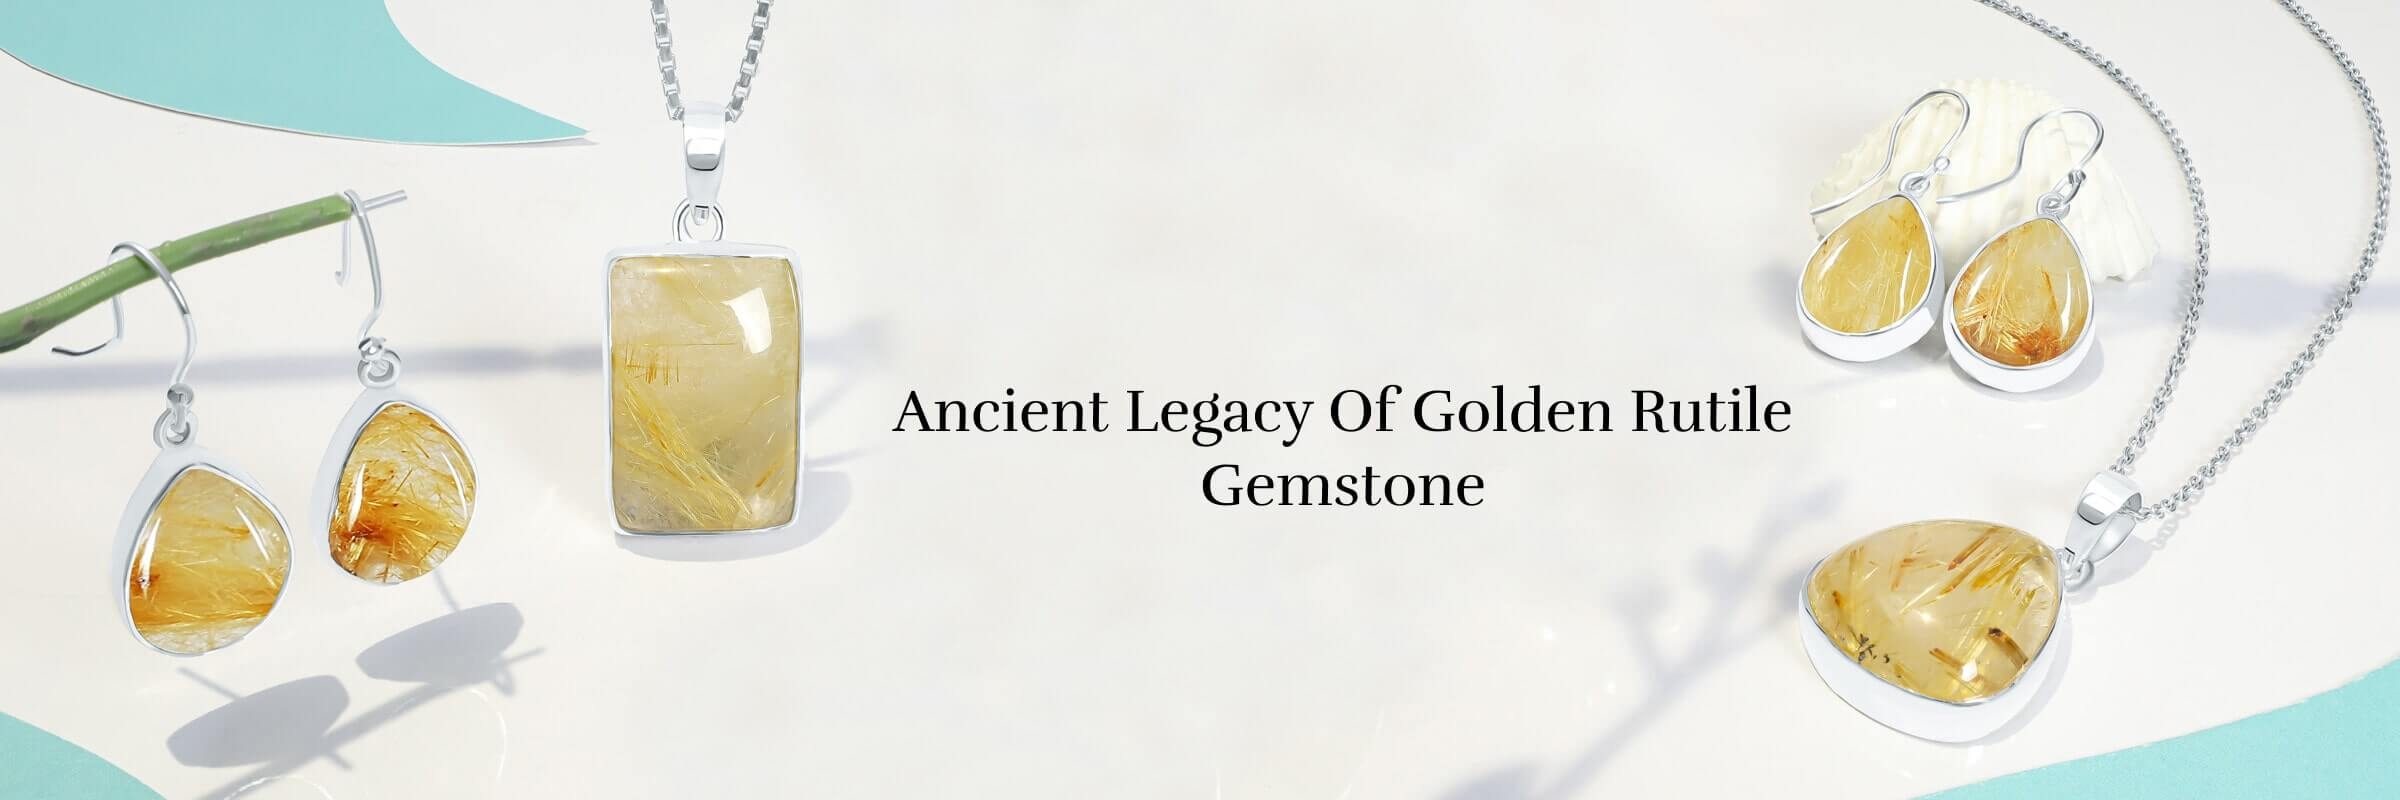 History of Golden Rutile Gemstone